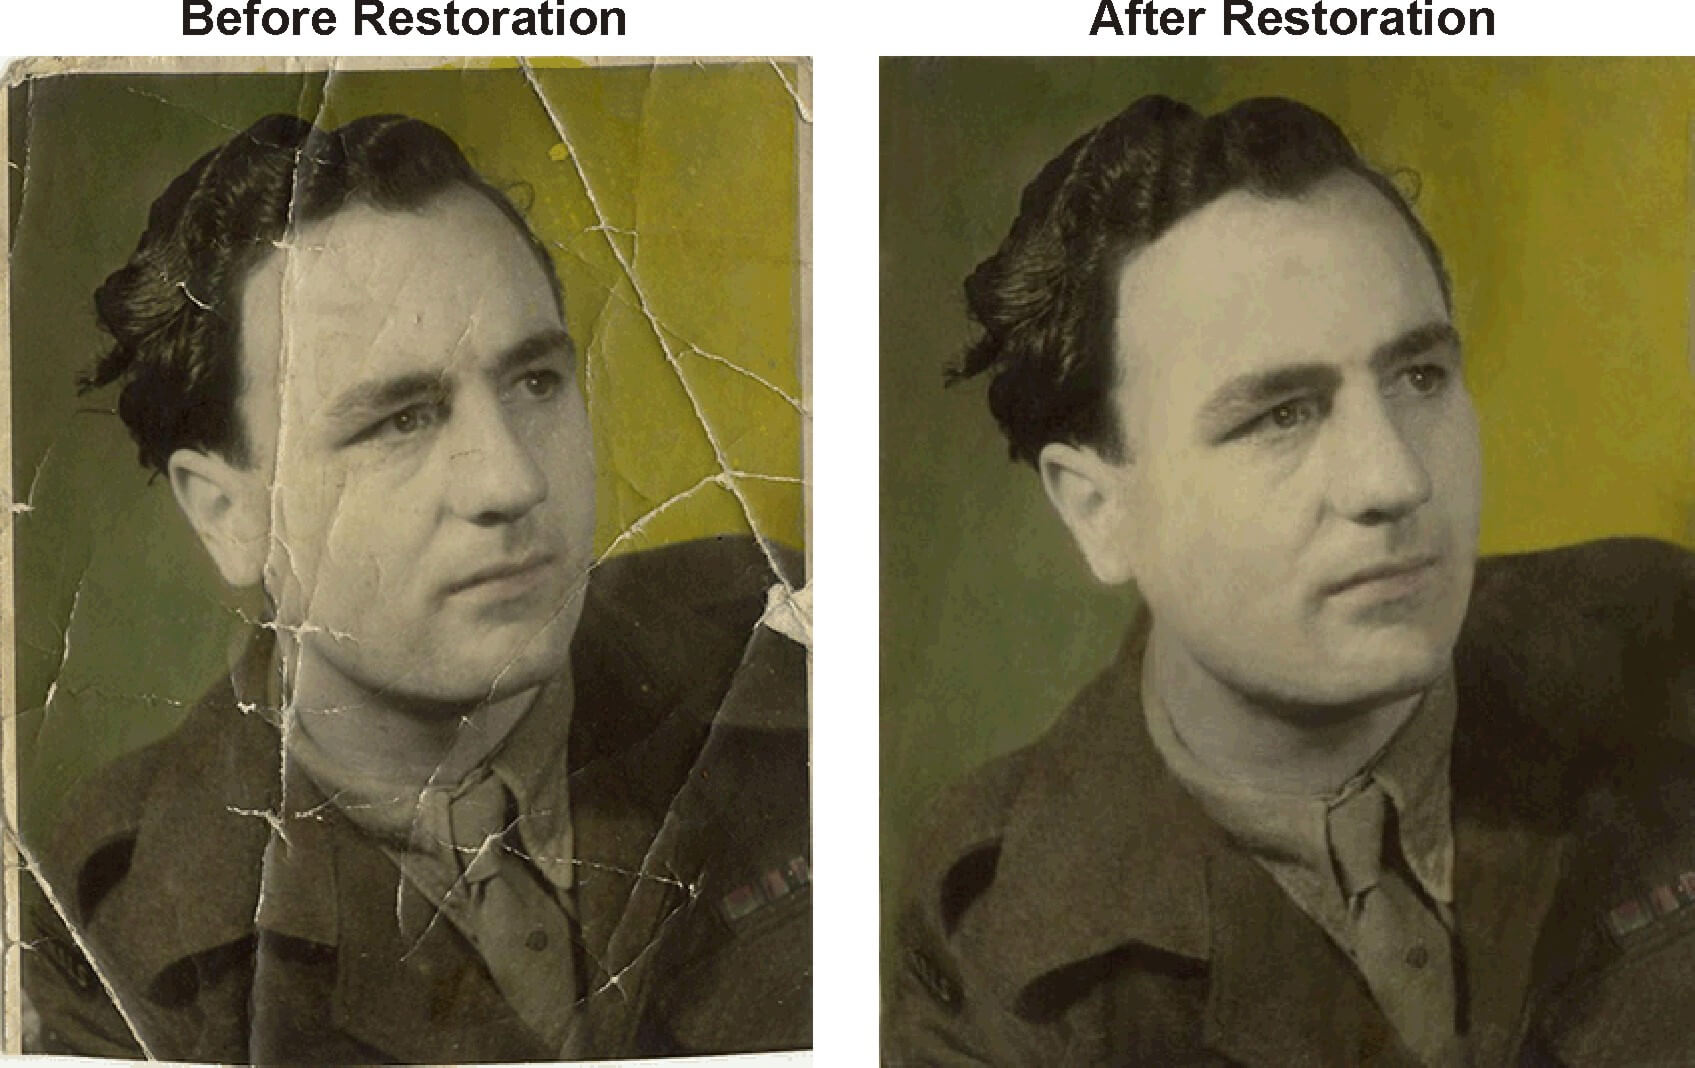 Restoration Example 1